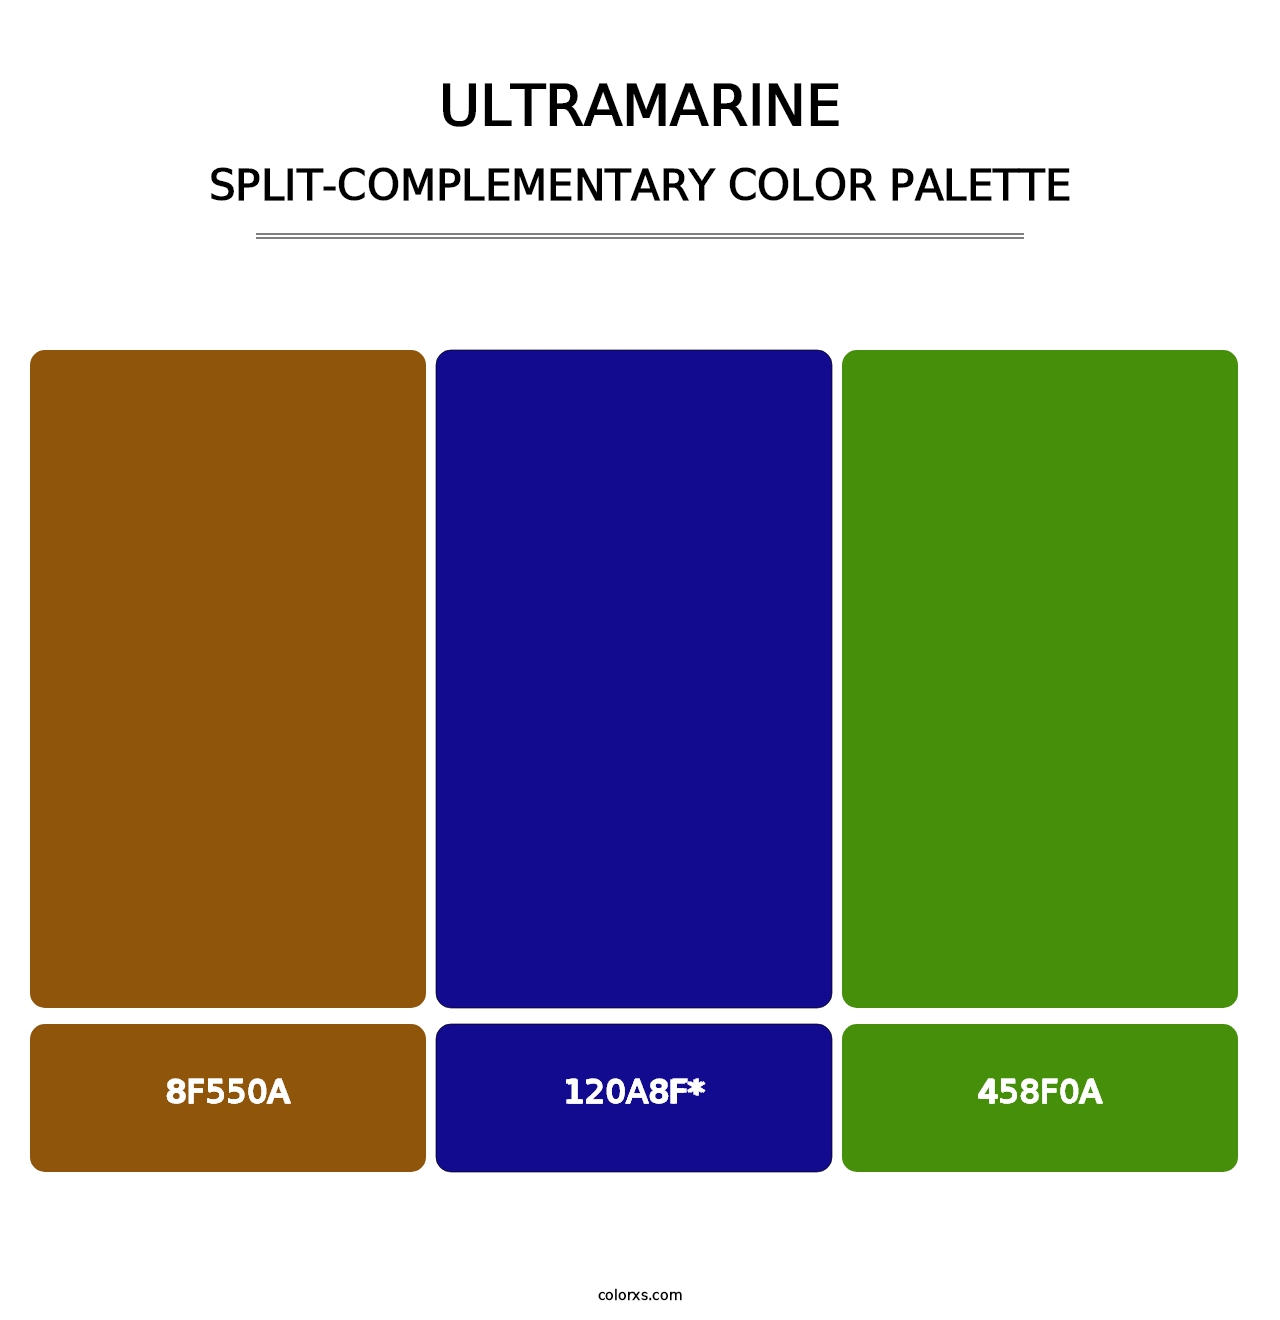 Ultramarine - Split-Complementary Color Palette